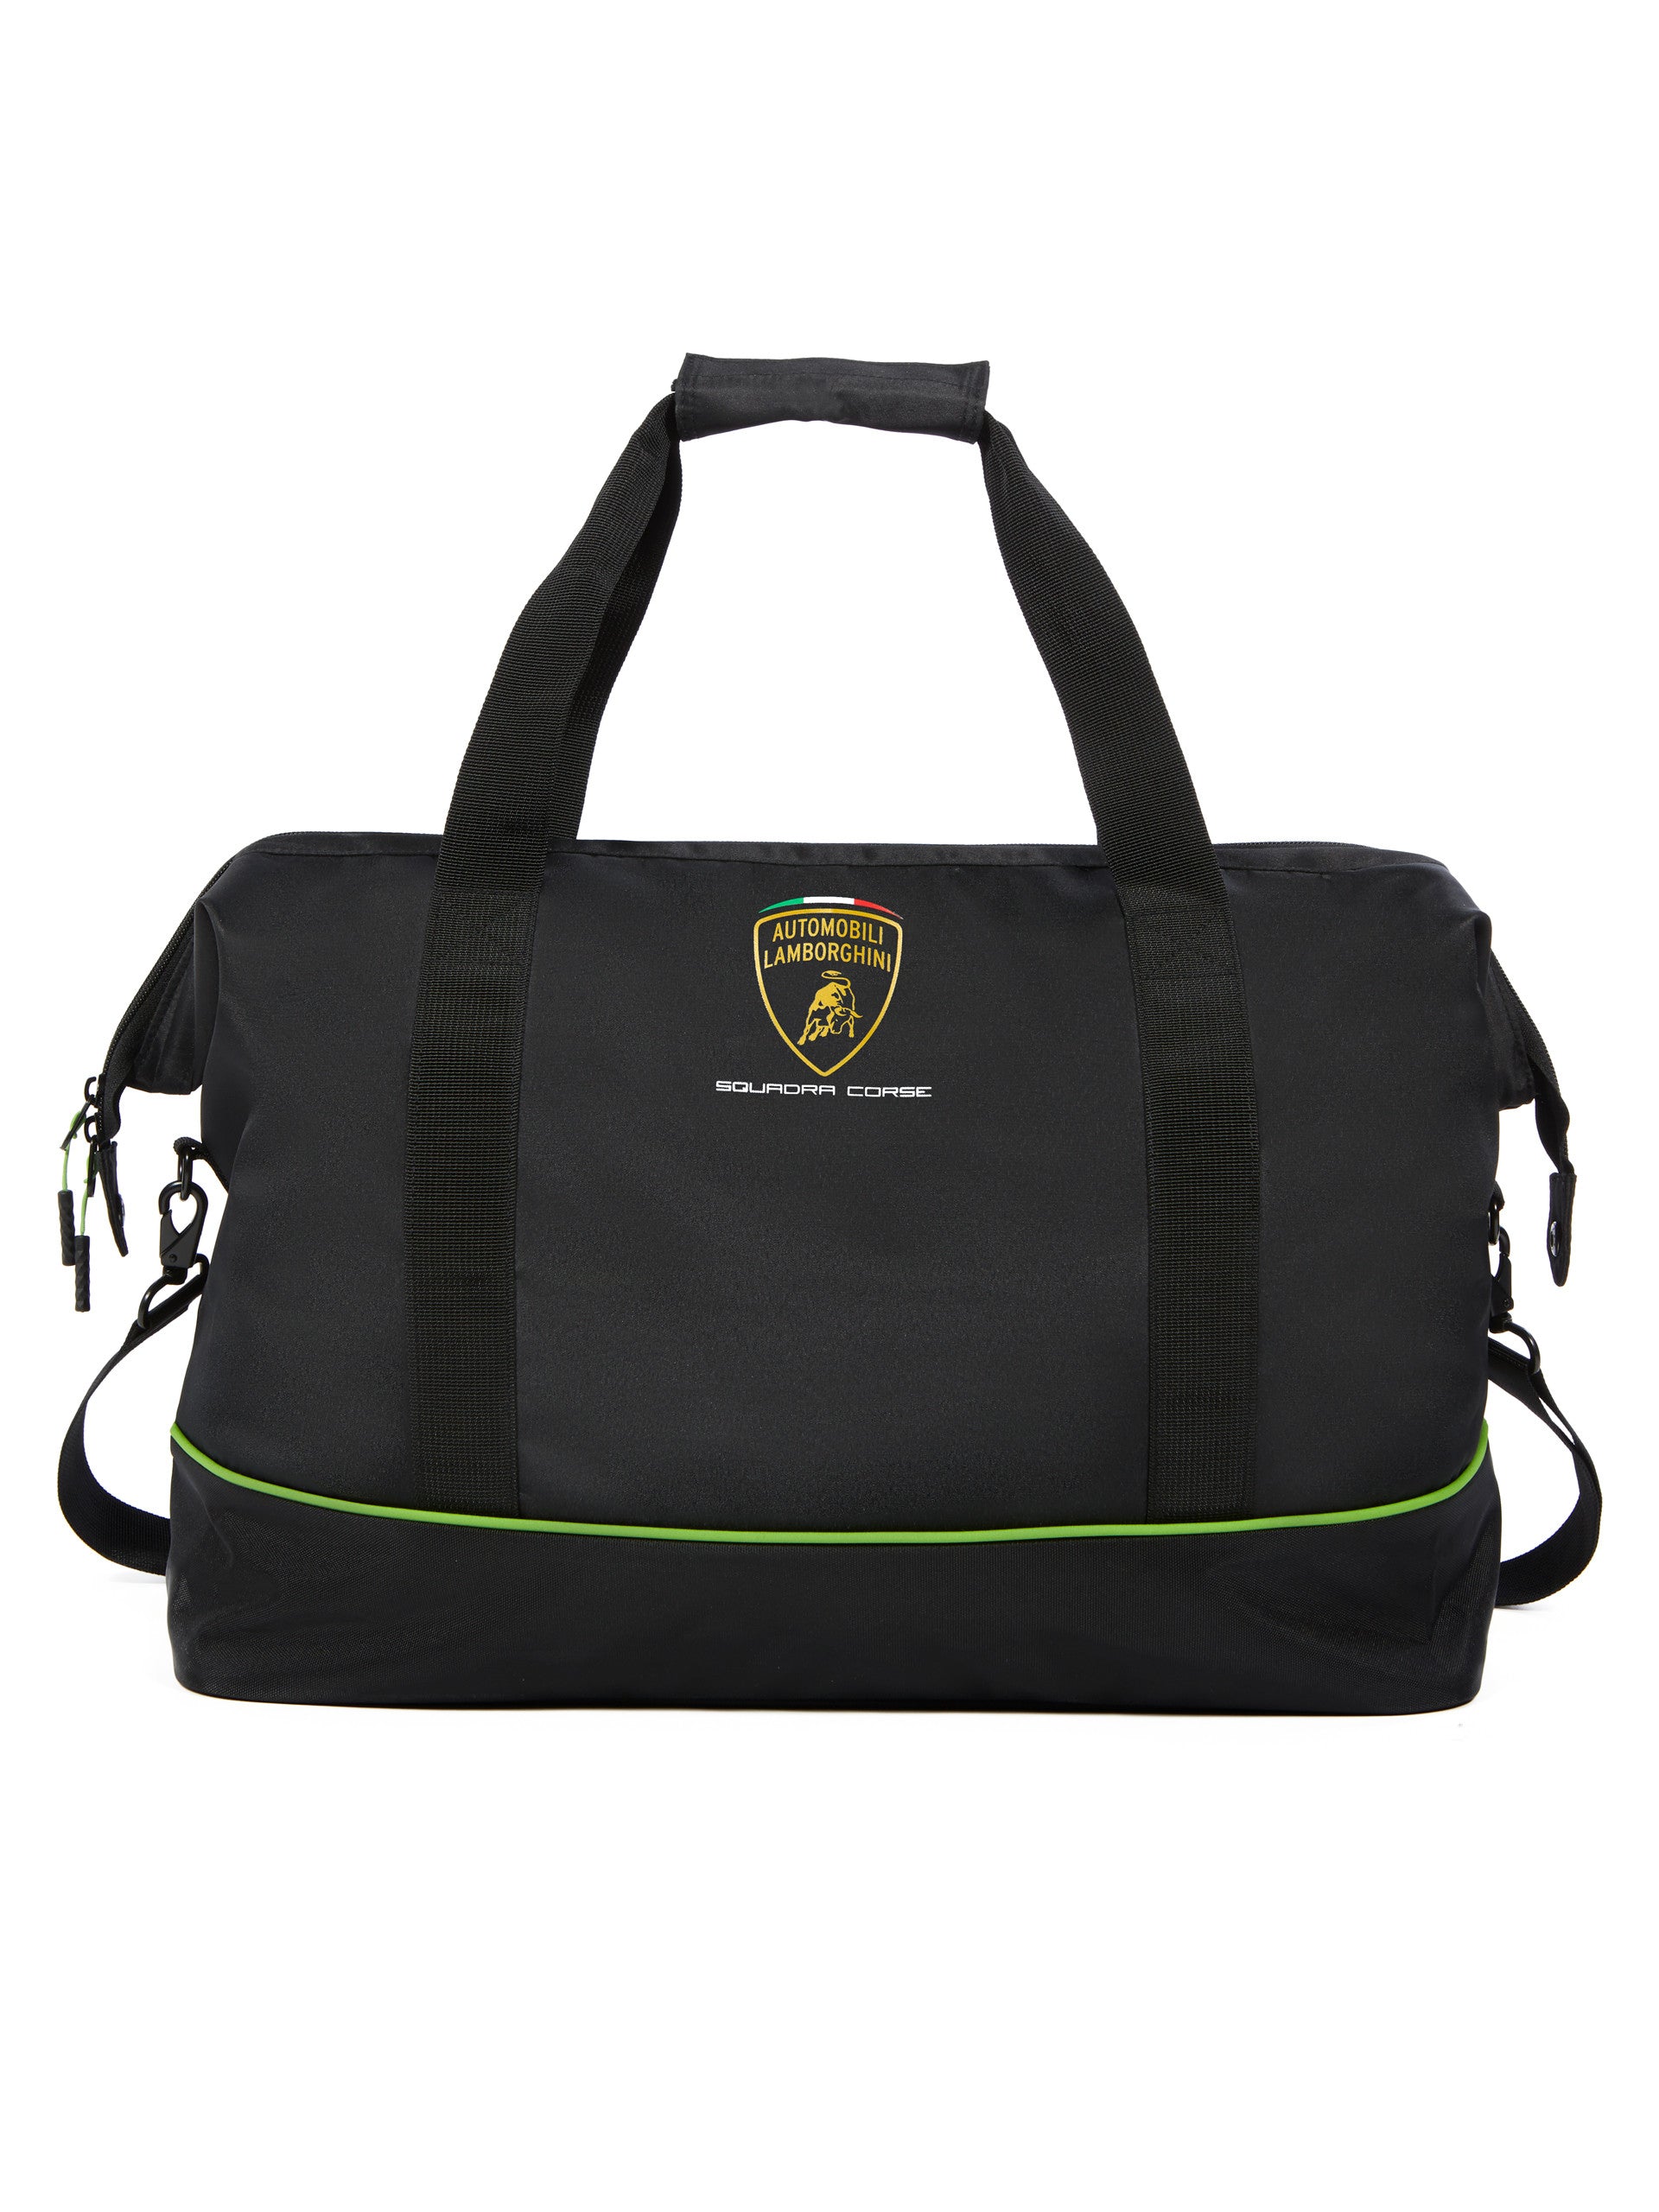 Lamborghini Squadra Corse Travel Duffel Bag Black